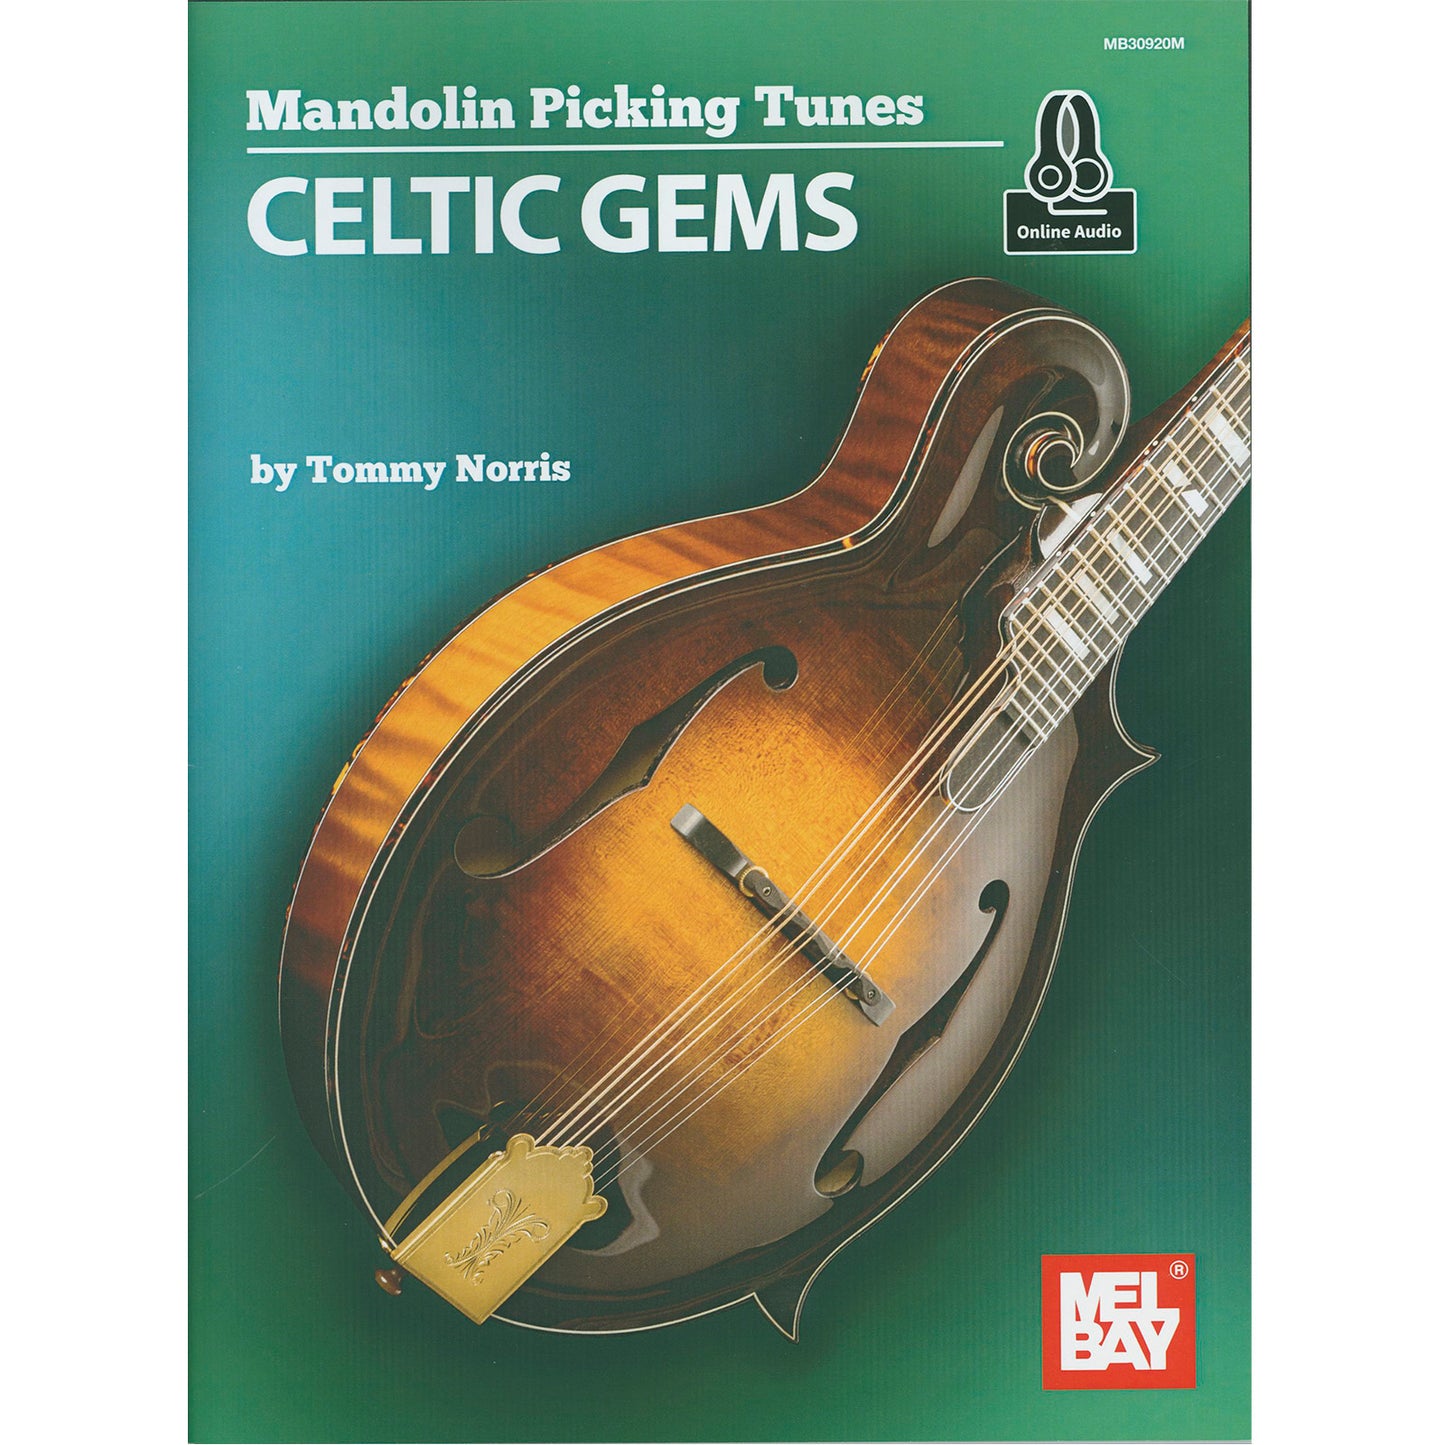 Image 1 of Mandolin Picking Tunes - Celtic Gems- SKU# 02-30920M : Product Type Media : Elderly Instruments